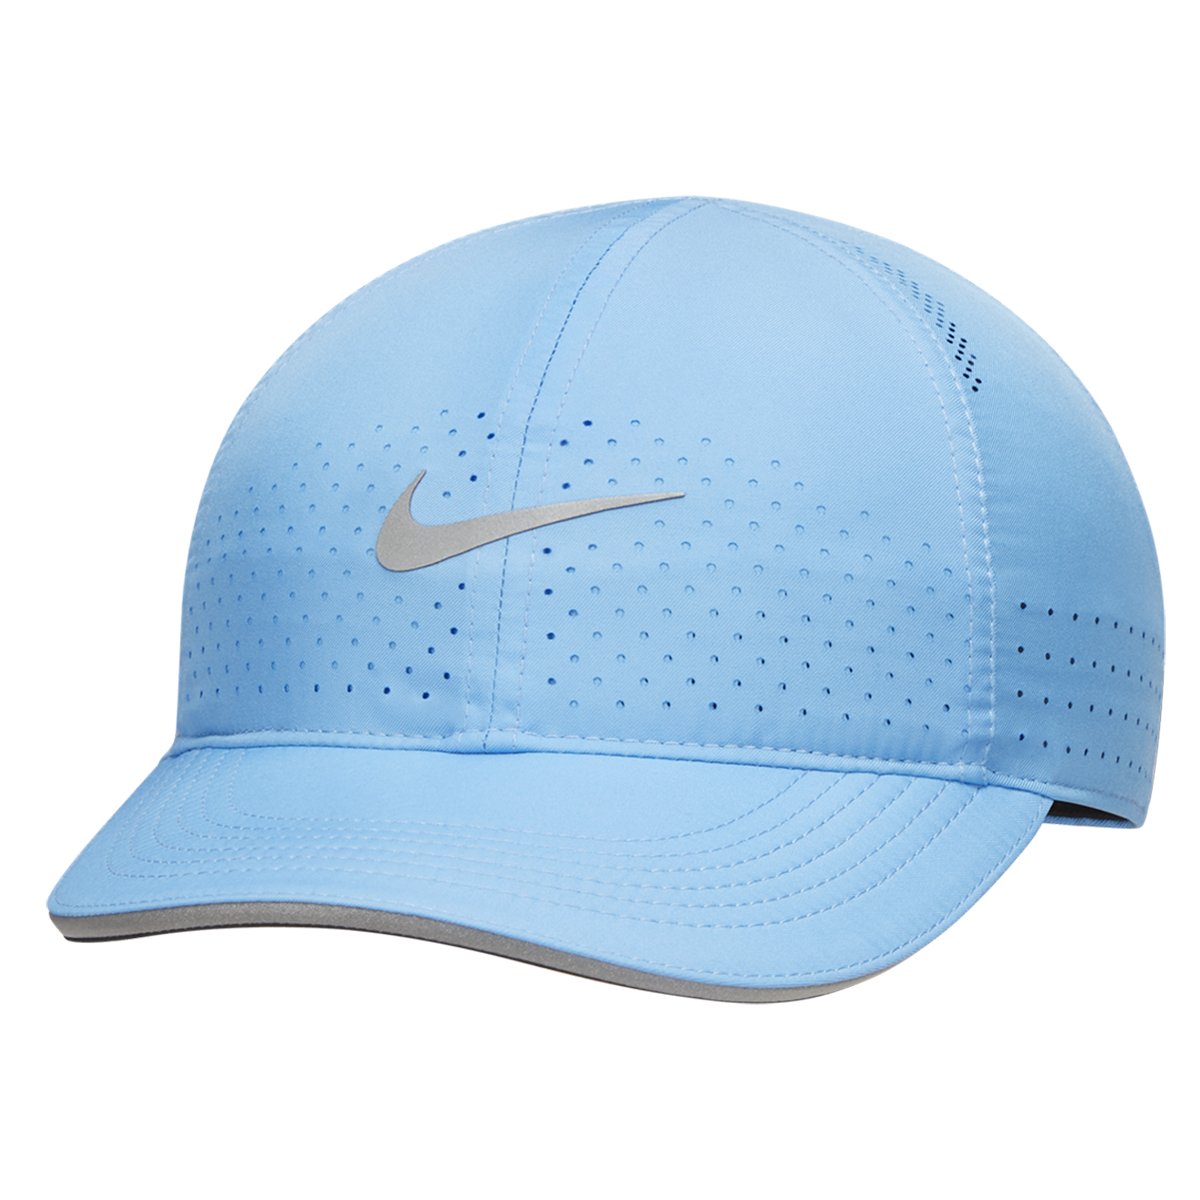 Women's Nike Featherlight Cap